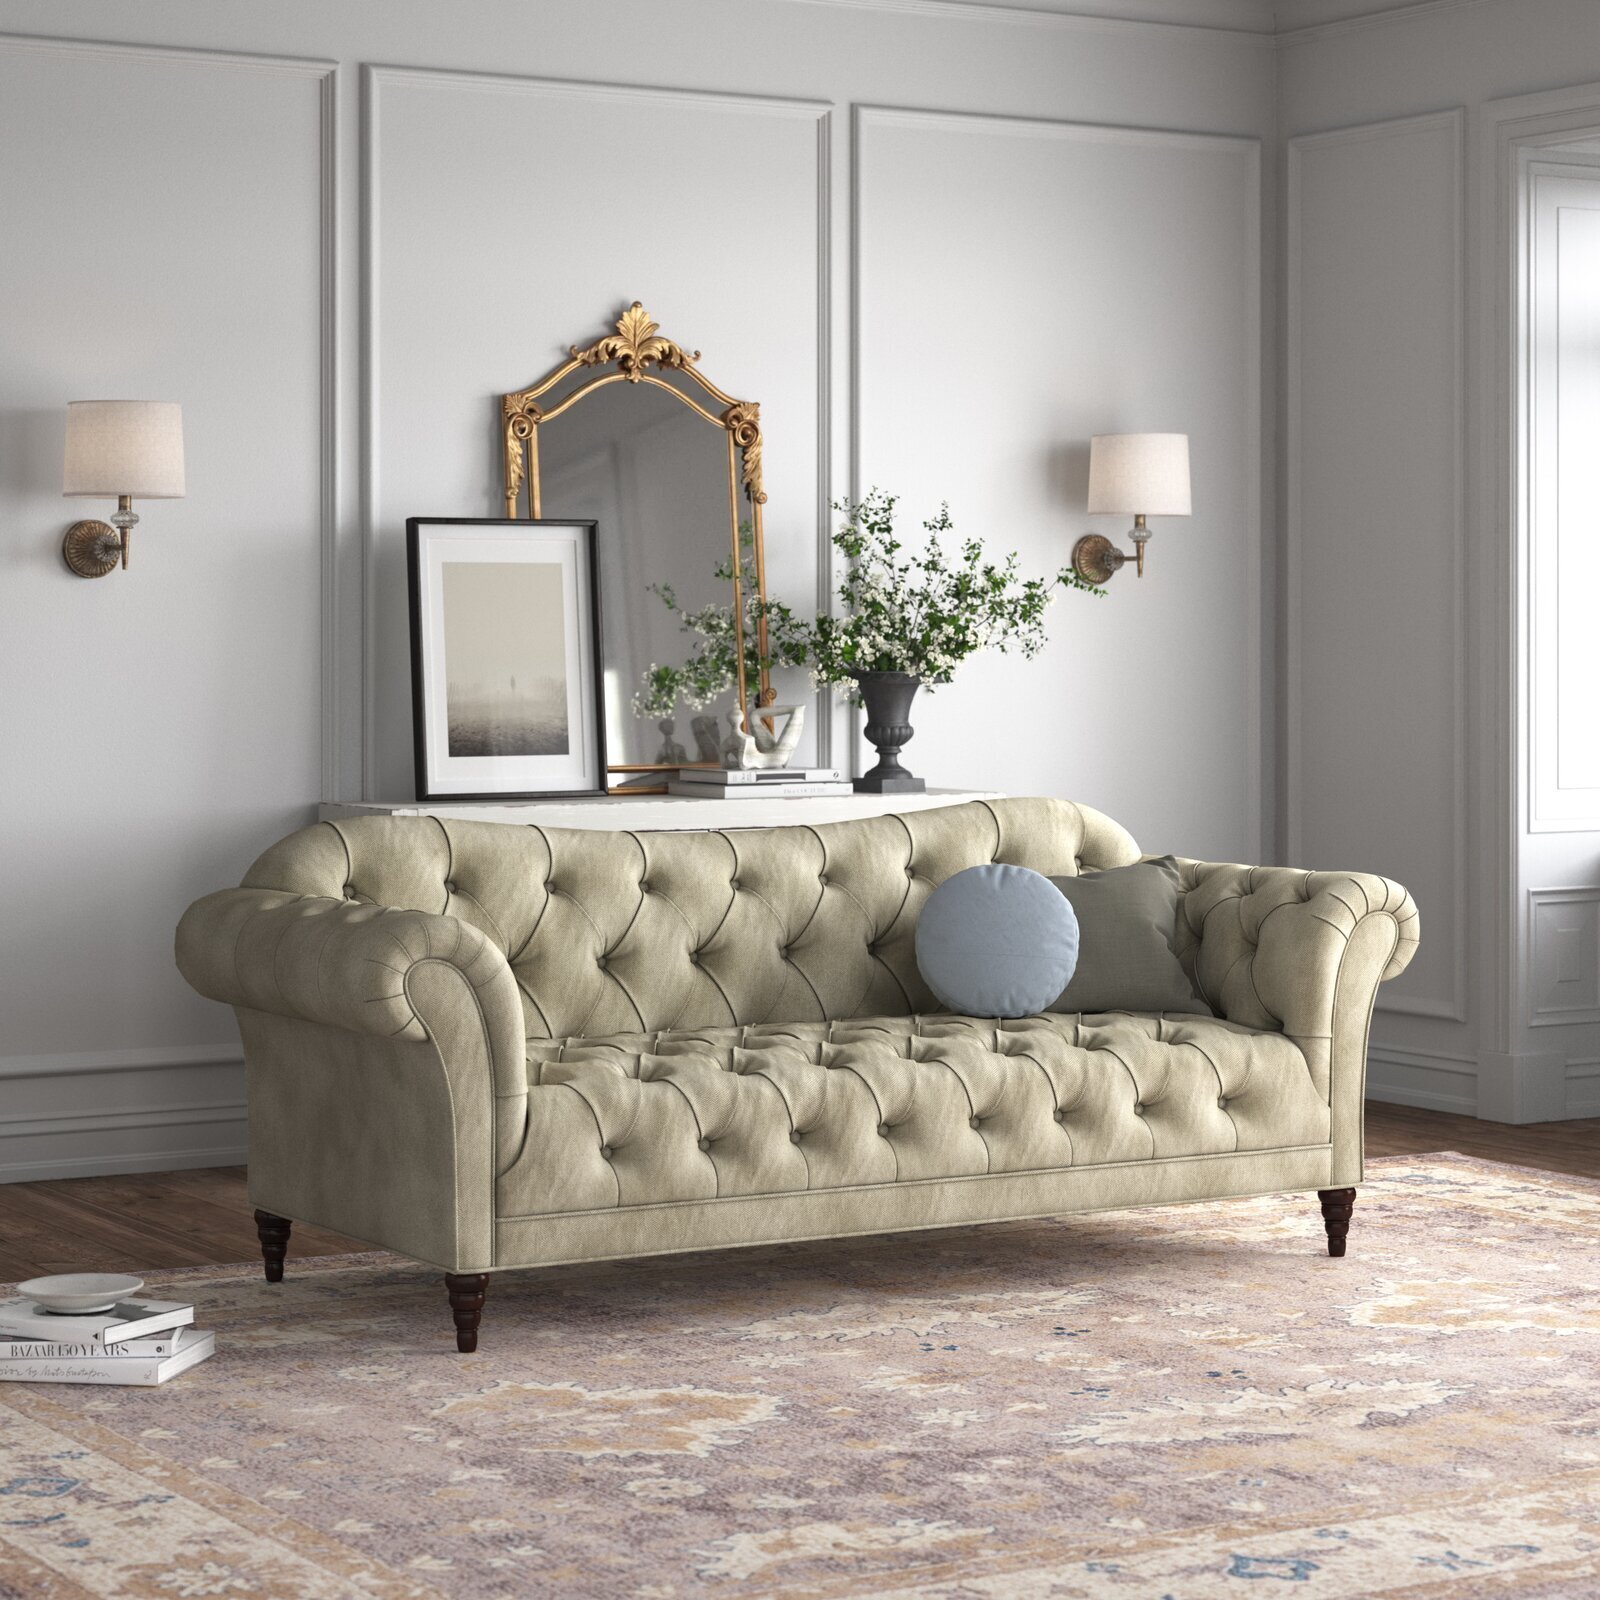 Low British Style Sofa